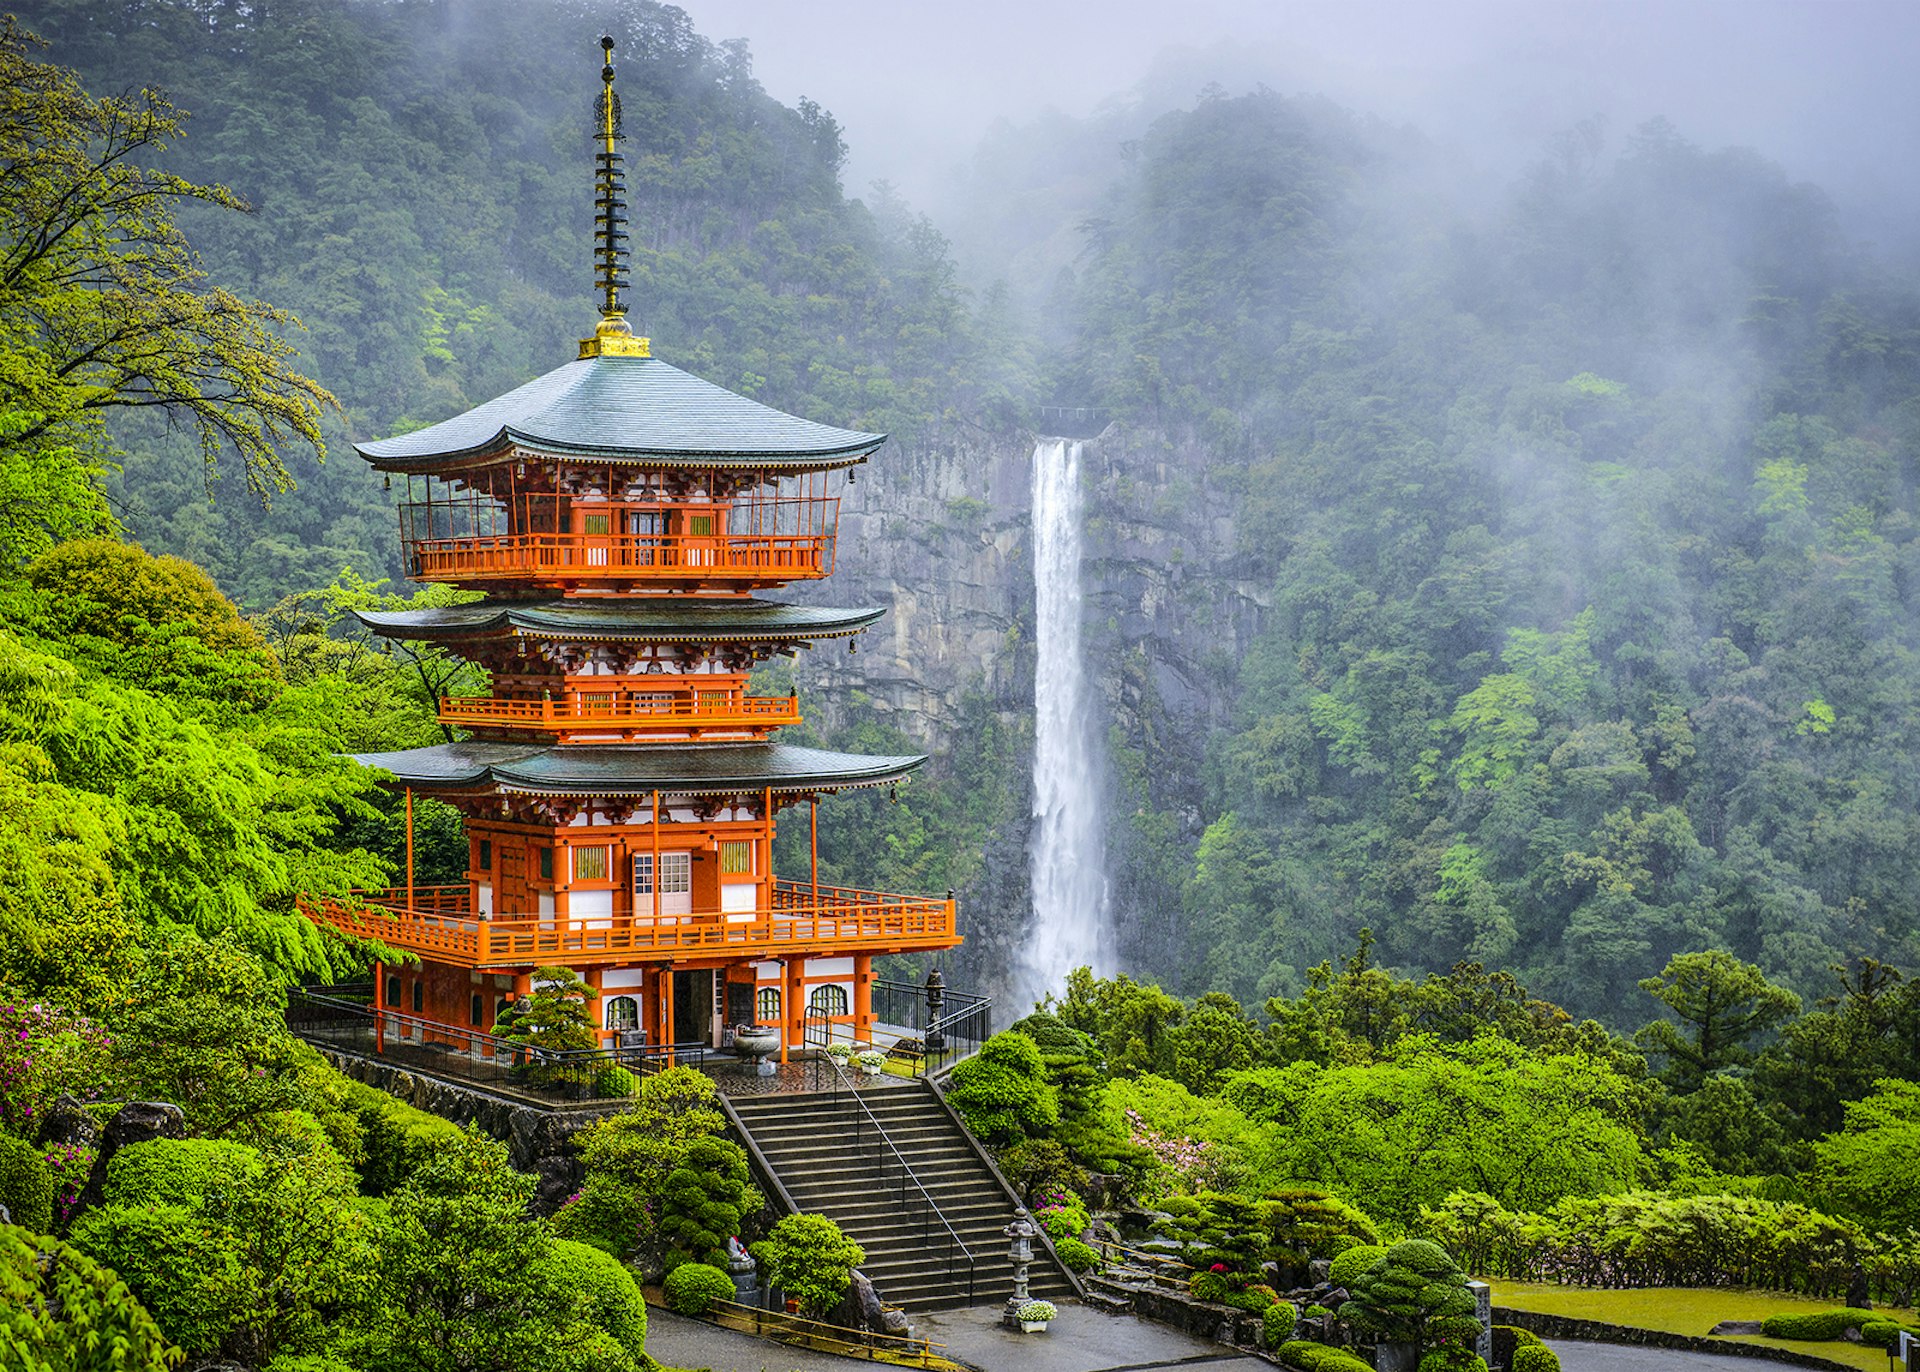 Nachi, Japan at Seigantoji Pagoda and Nachi Falls